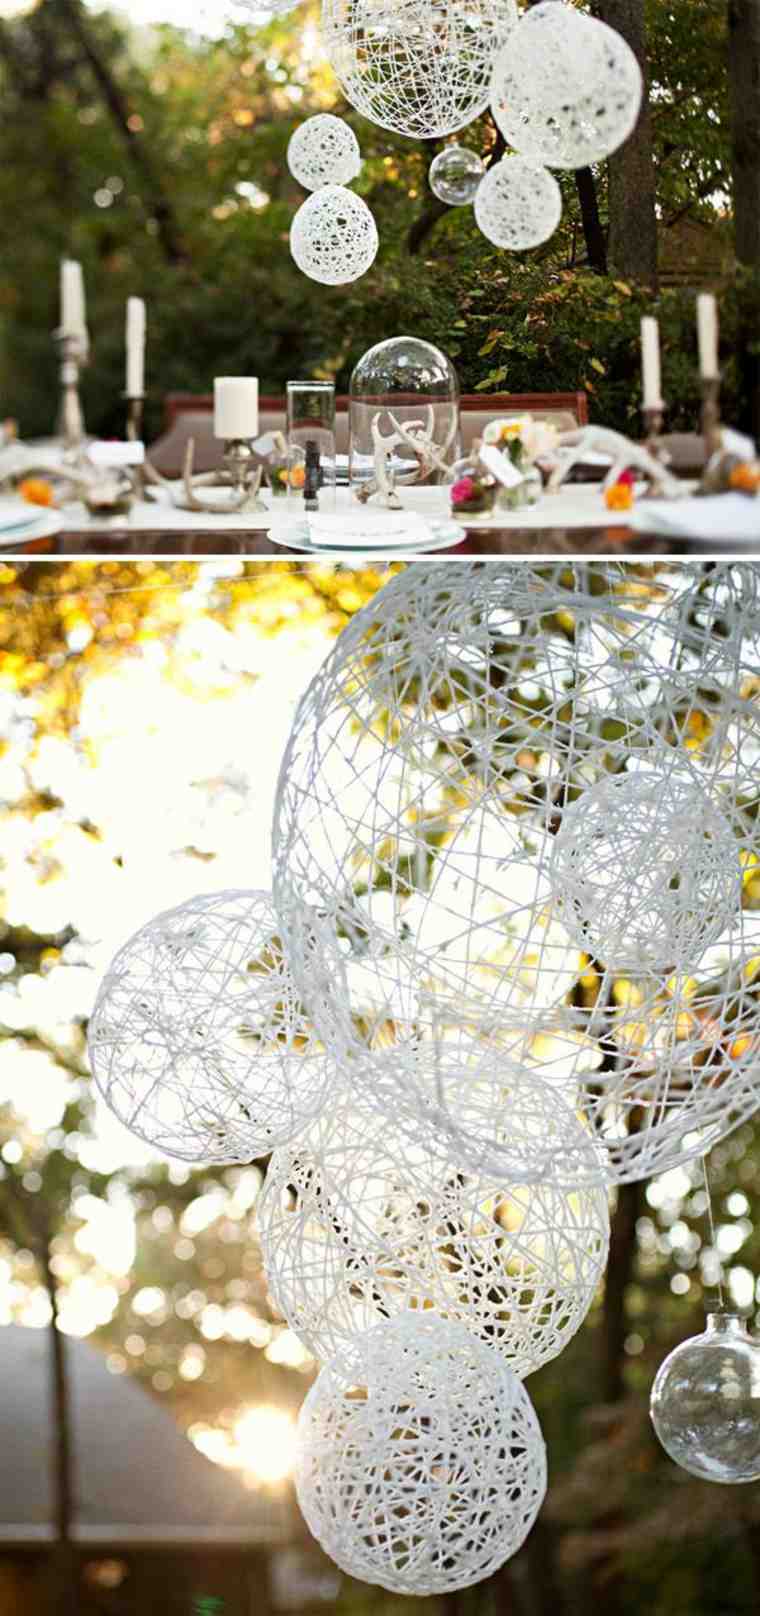 éclairage jardin idée lanterne blanche design moderne table de jardin